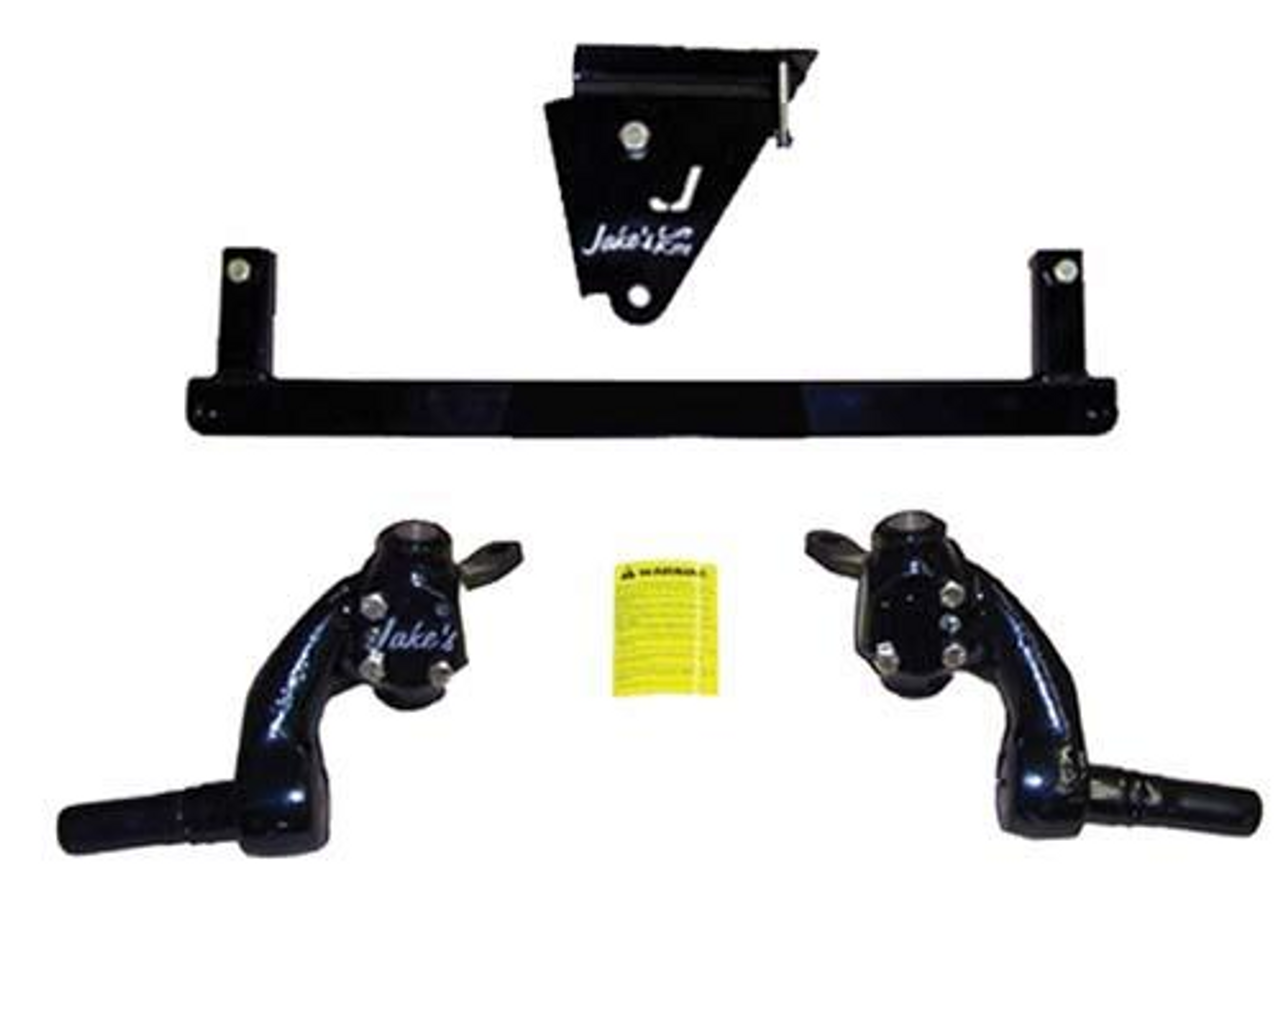 Jakes 3" Spindle Lift Kit for Yamaha G22 Golf Cart, 6255-3